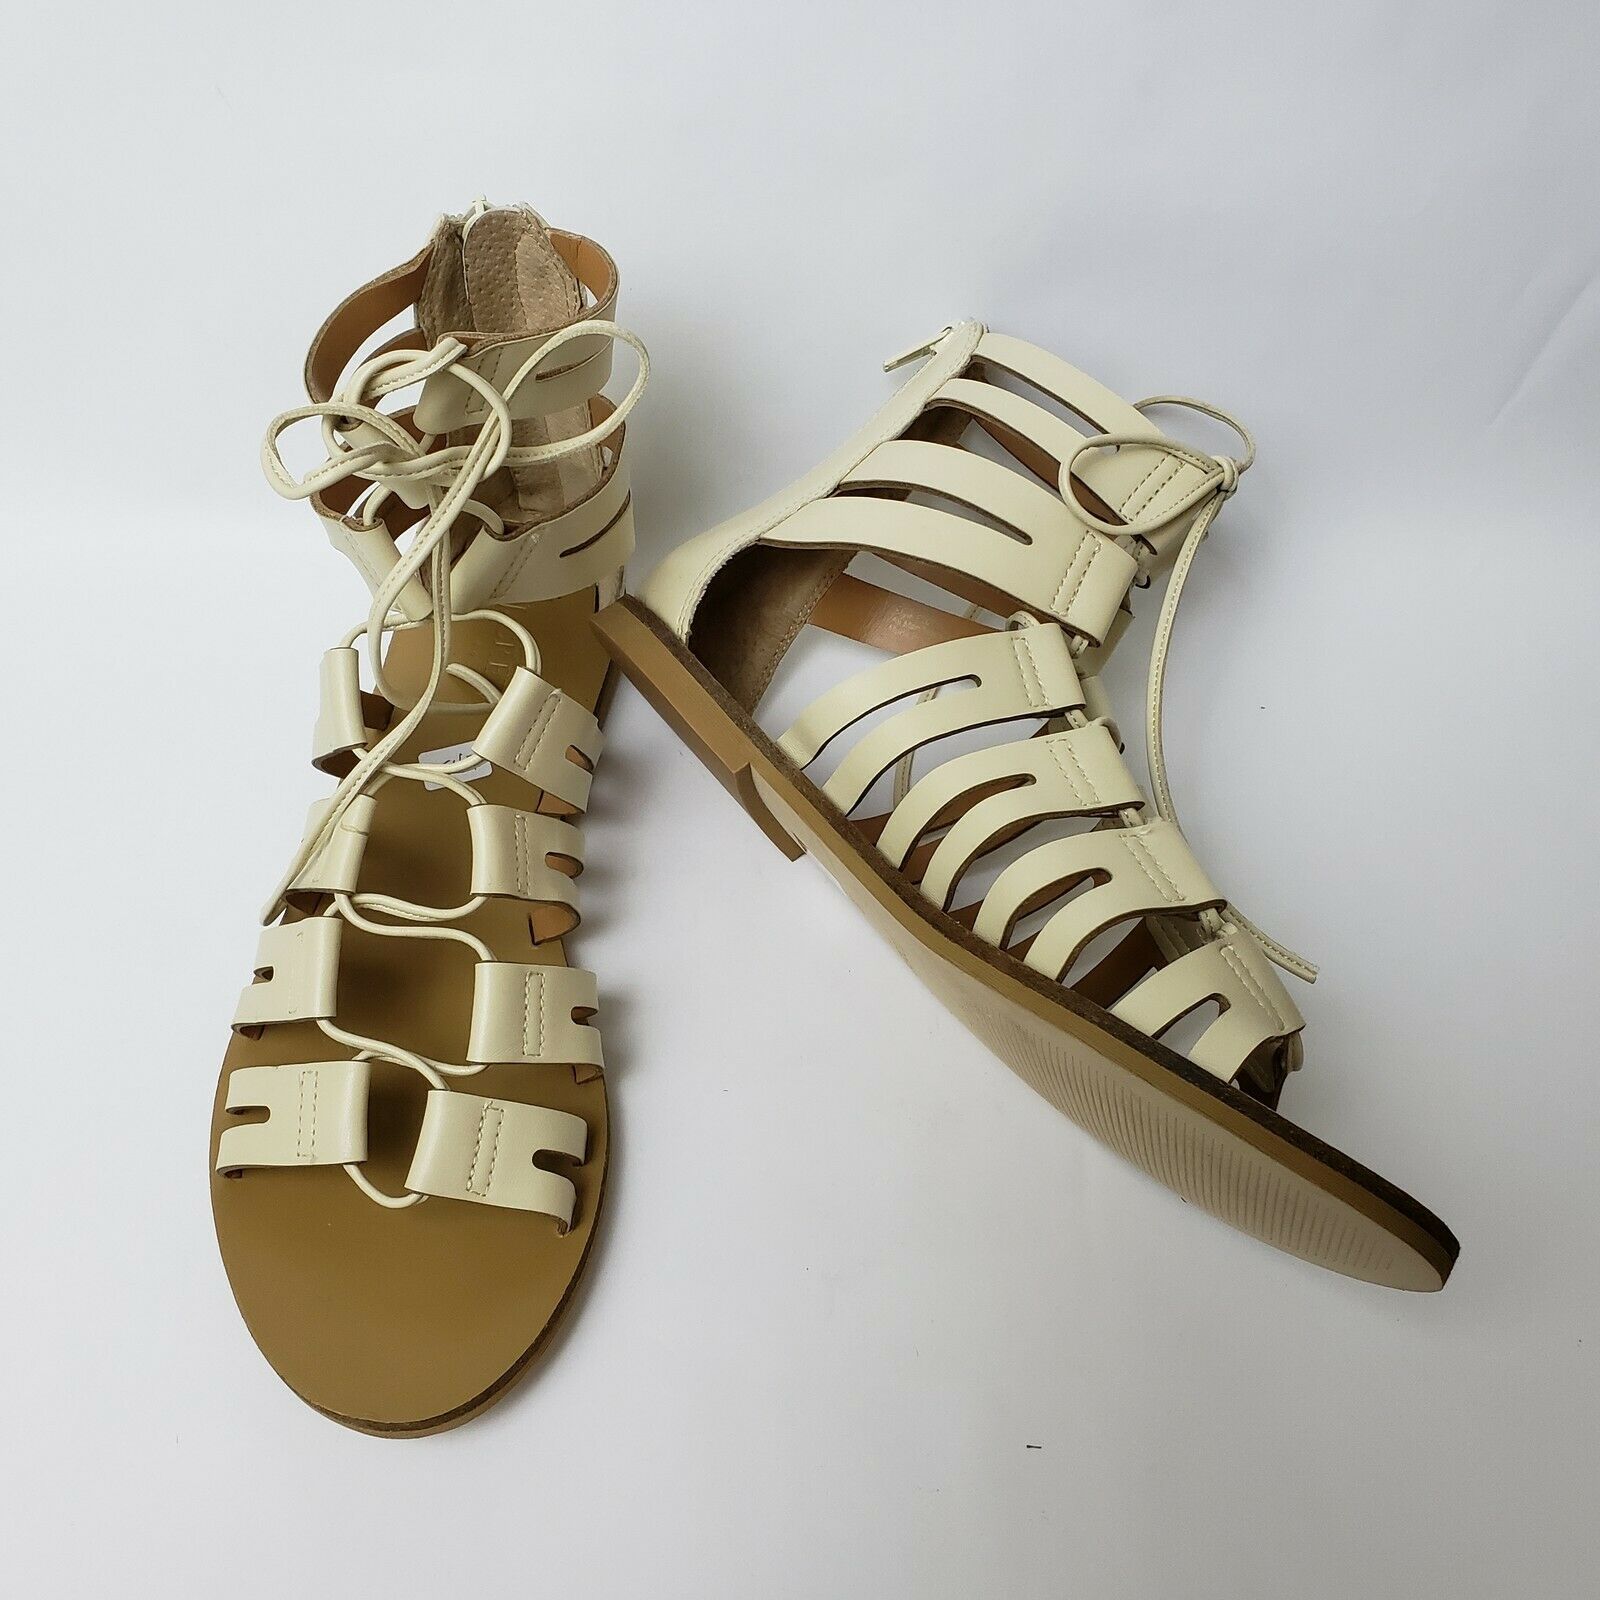 J Crew Womens Shoes Sandals Flats Back Zipper Gladiator Cream New Size US 10